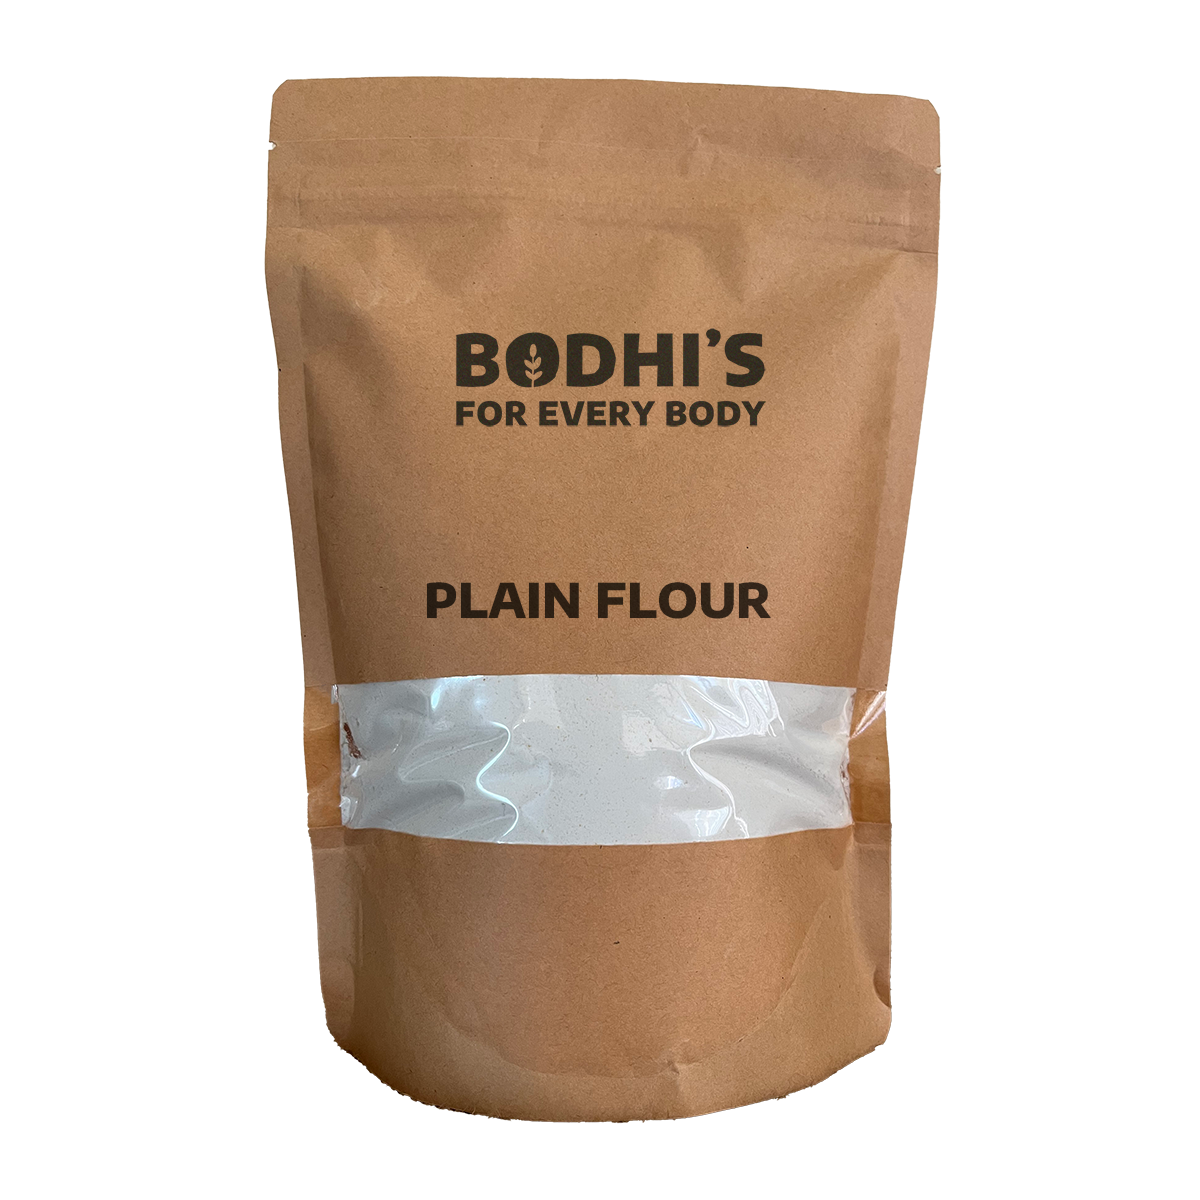 A photo of Bodhi's Gluten Free plain flour